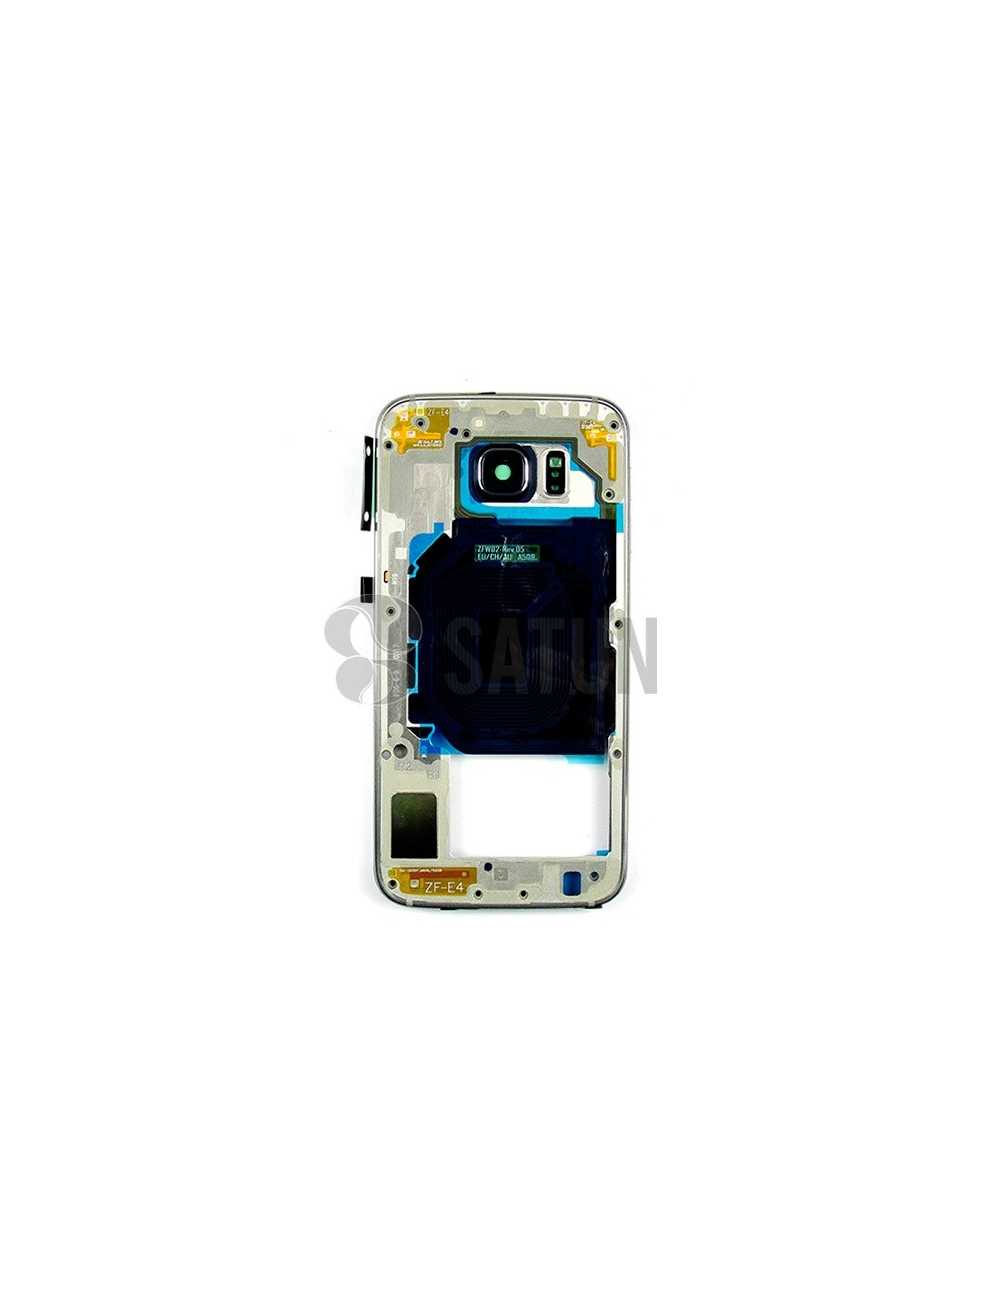 Carcasa intermedia Samsung Galaxy S6 oro (original con uso)